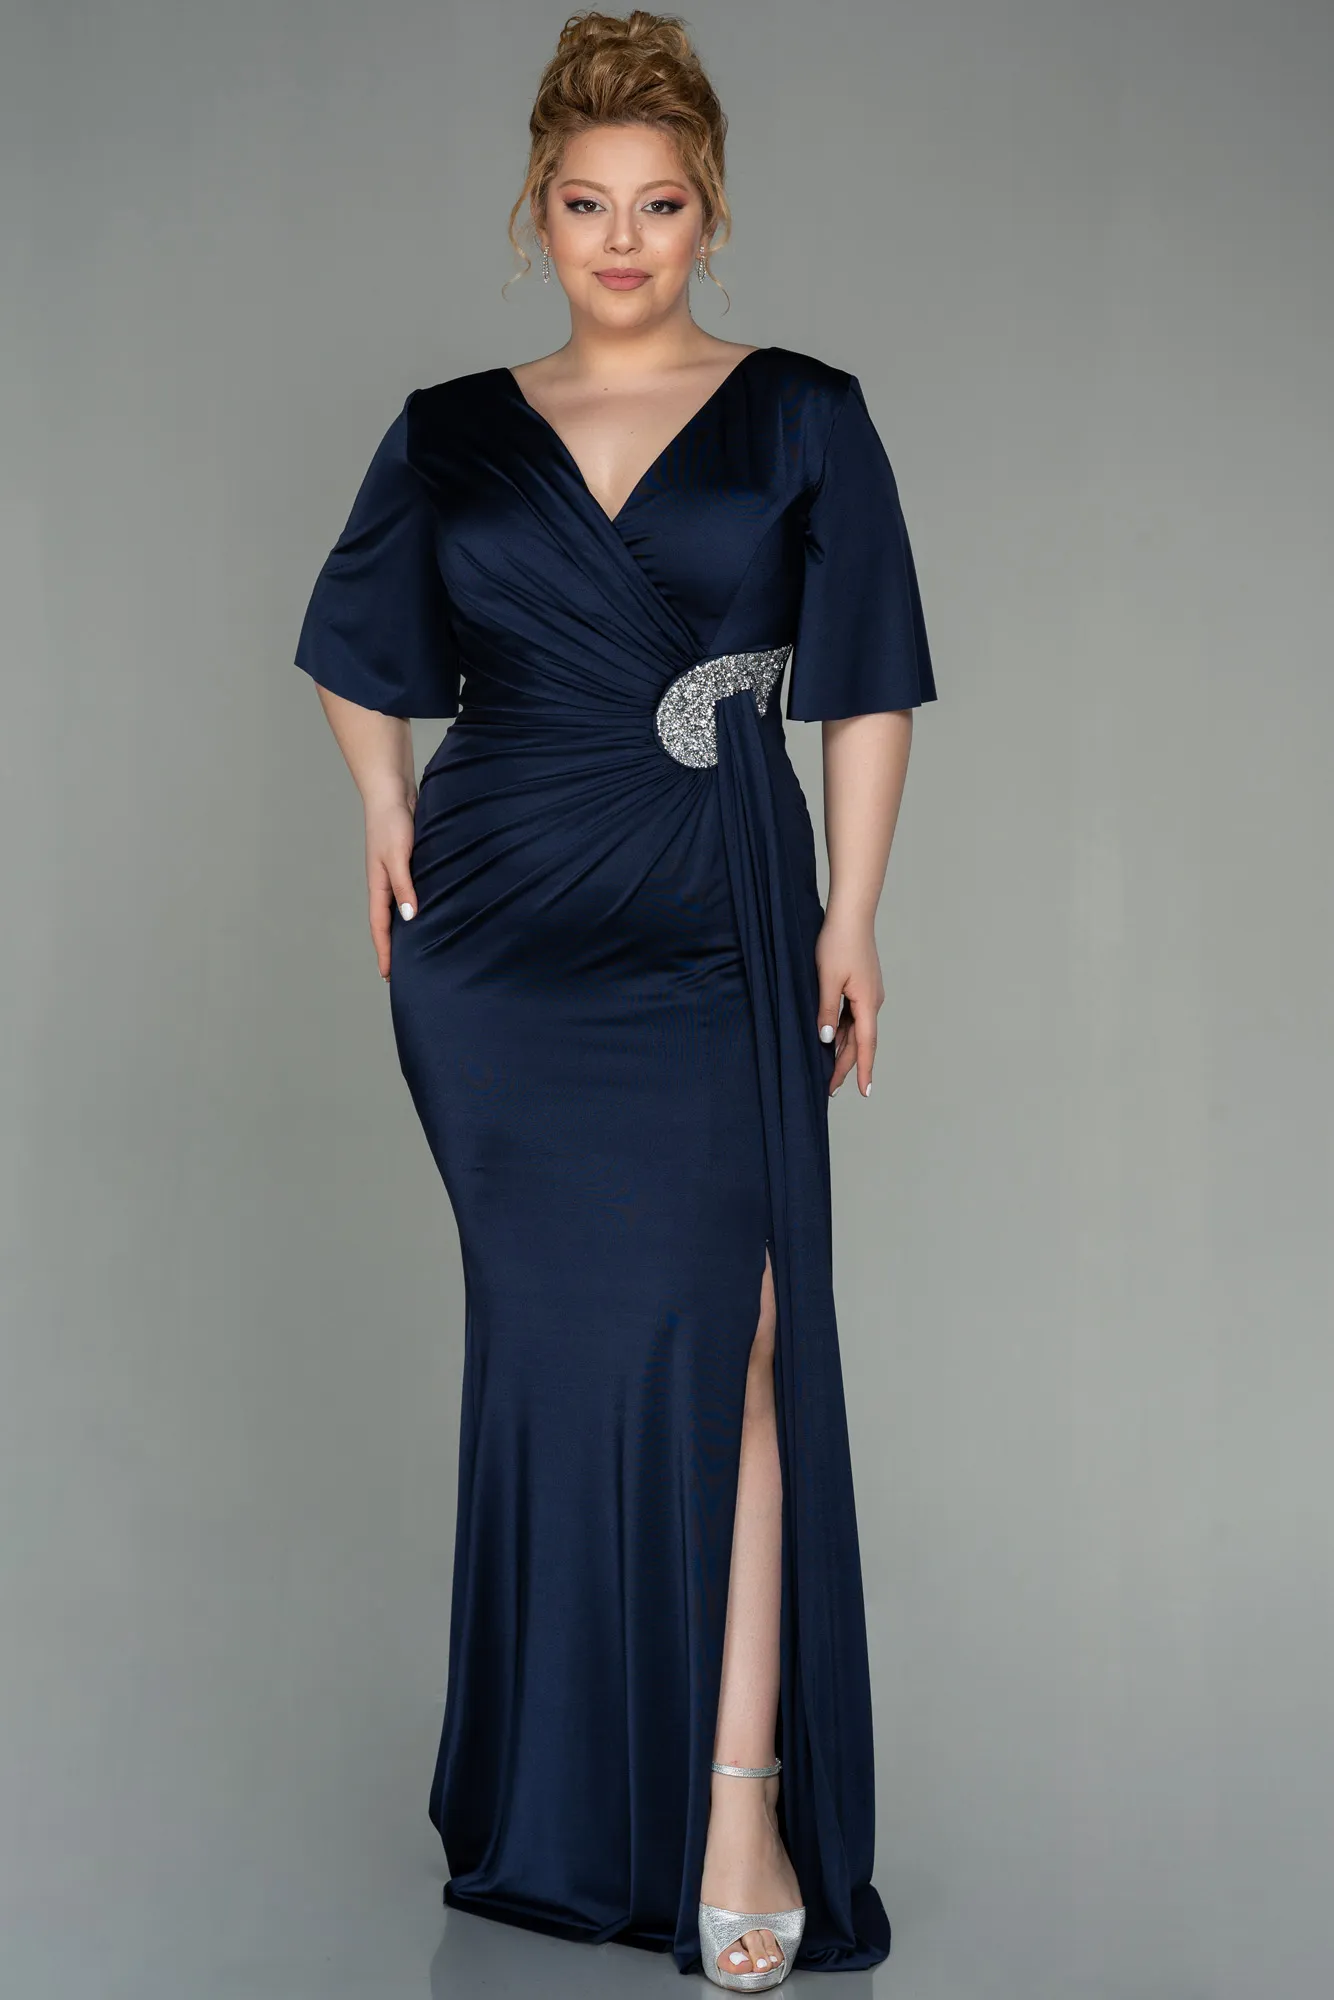 Navy Blue-Long Plus Size Evening Dress ABU2441